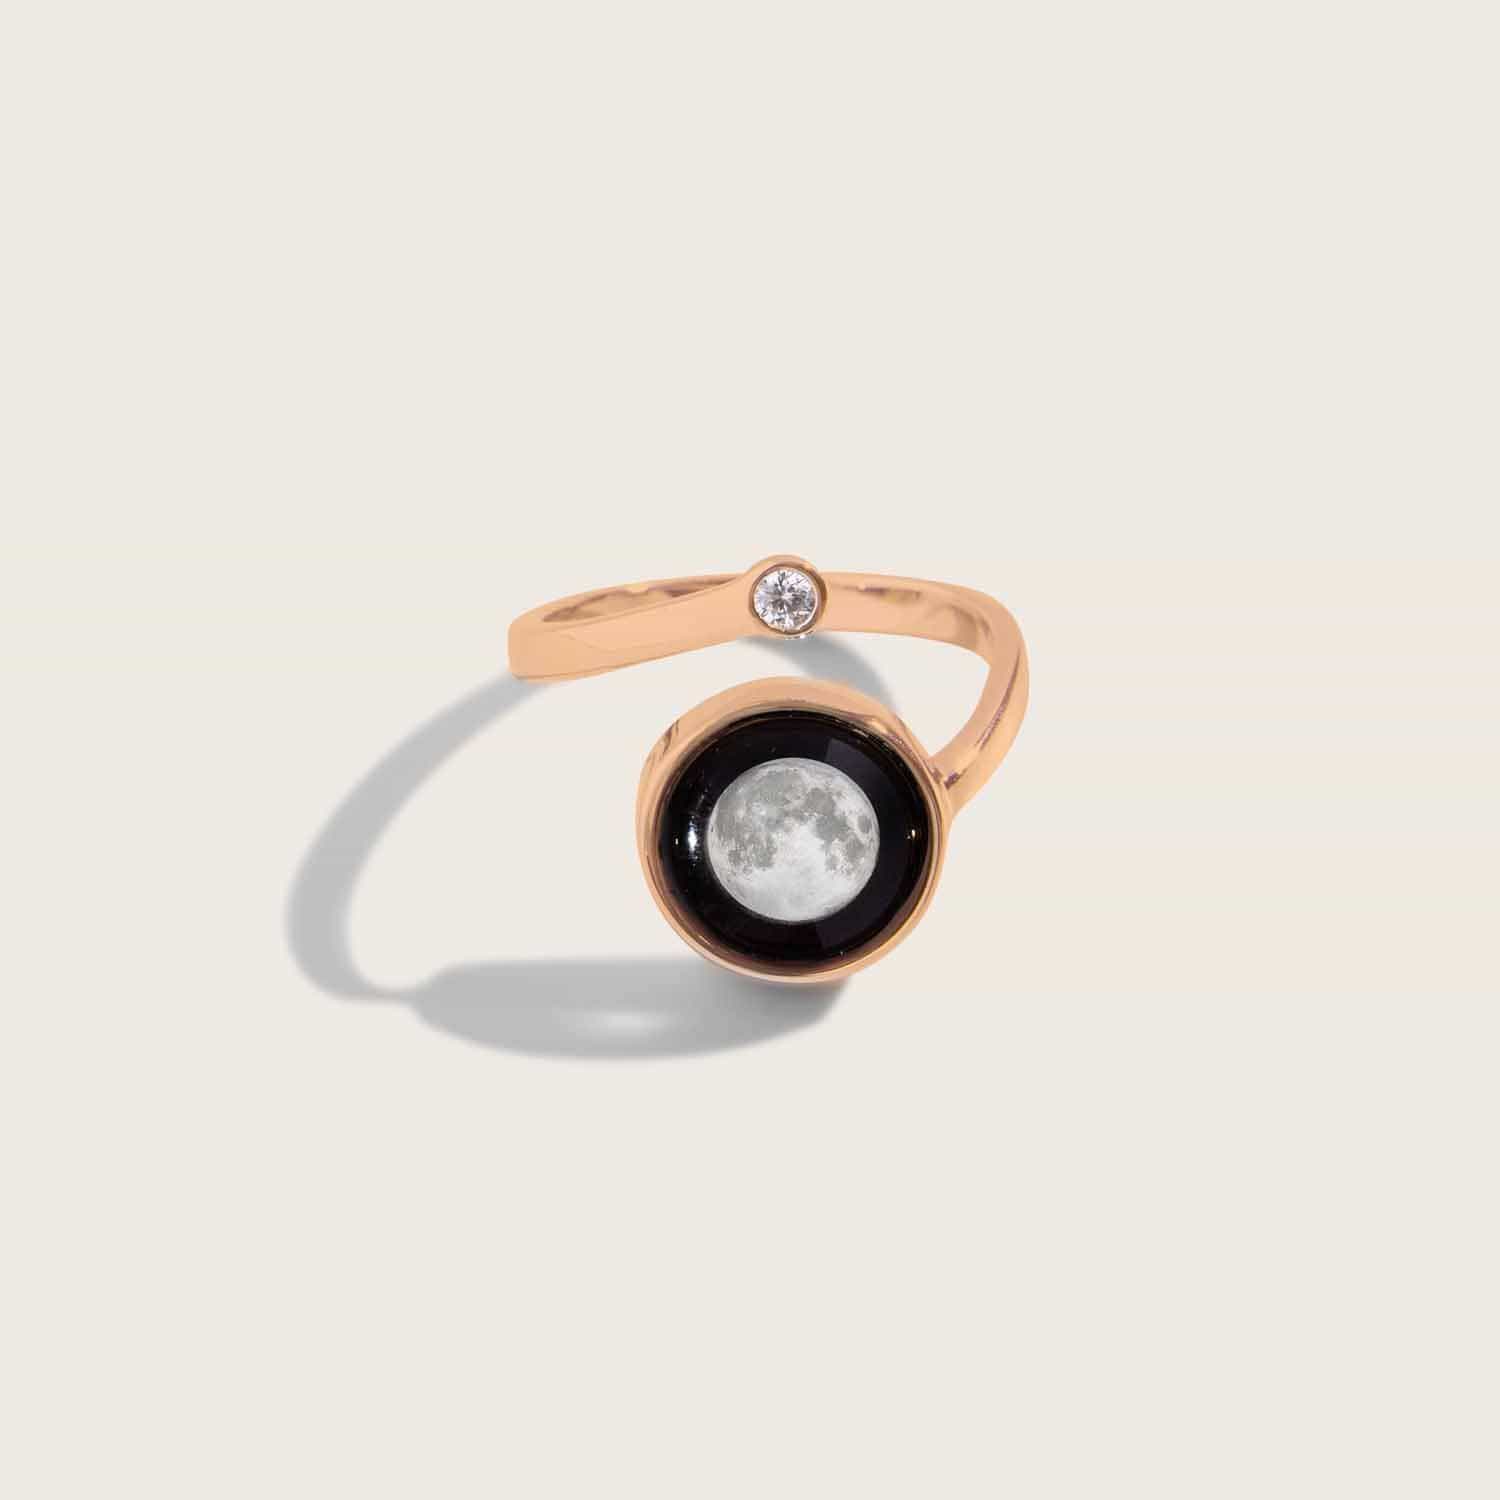 Moonglow Cosmic Spiral Adjustable Ring - Rose Gold